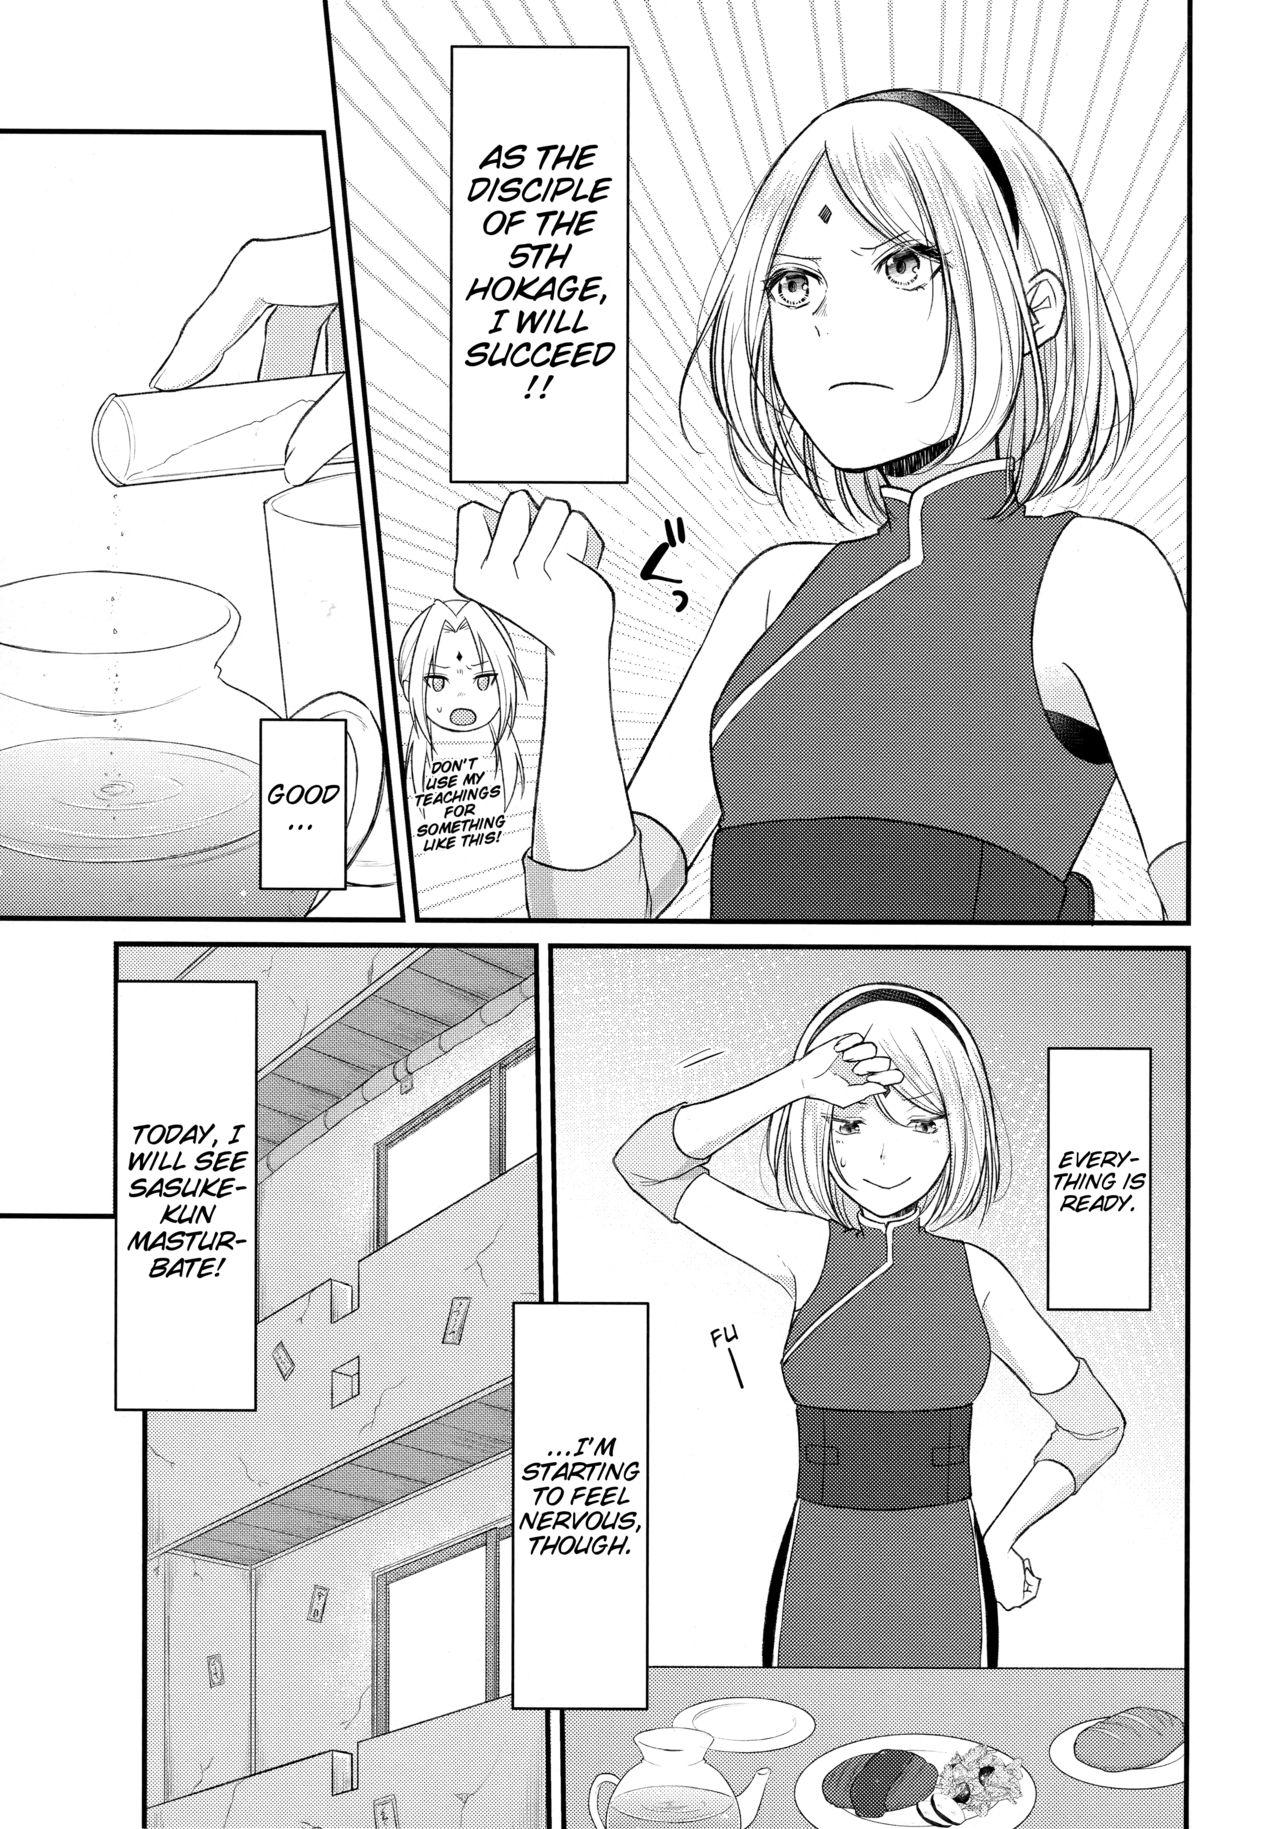 Small Tits Koukishin wa Neko o Korosu | Curiosity killed the cat - Naruto Shaking - Page 6